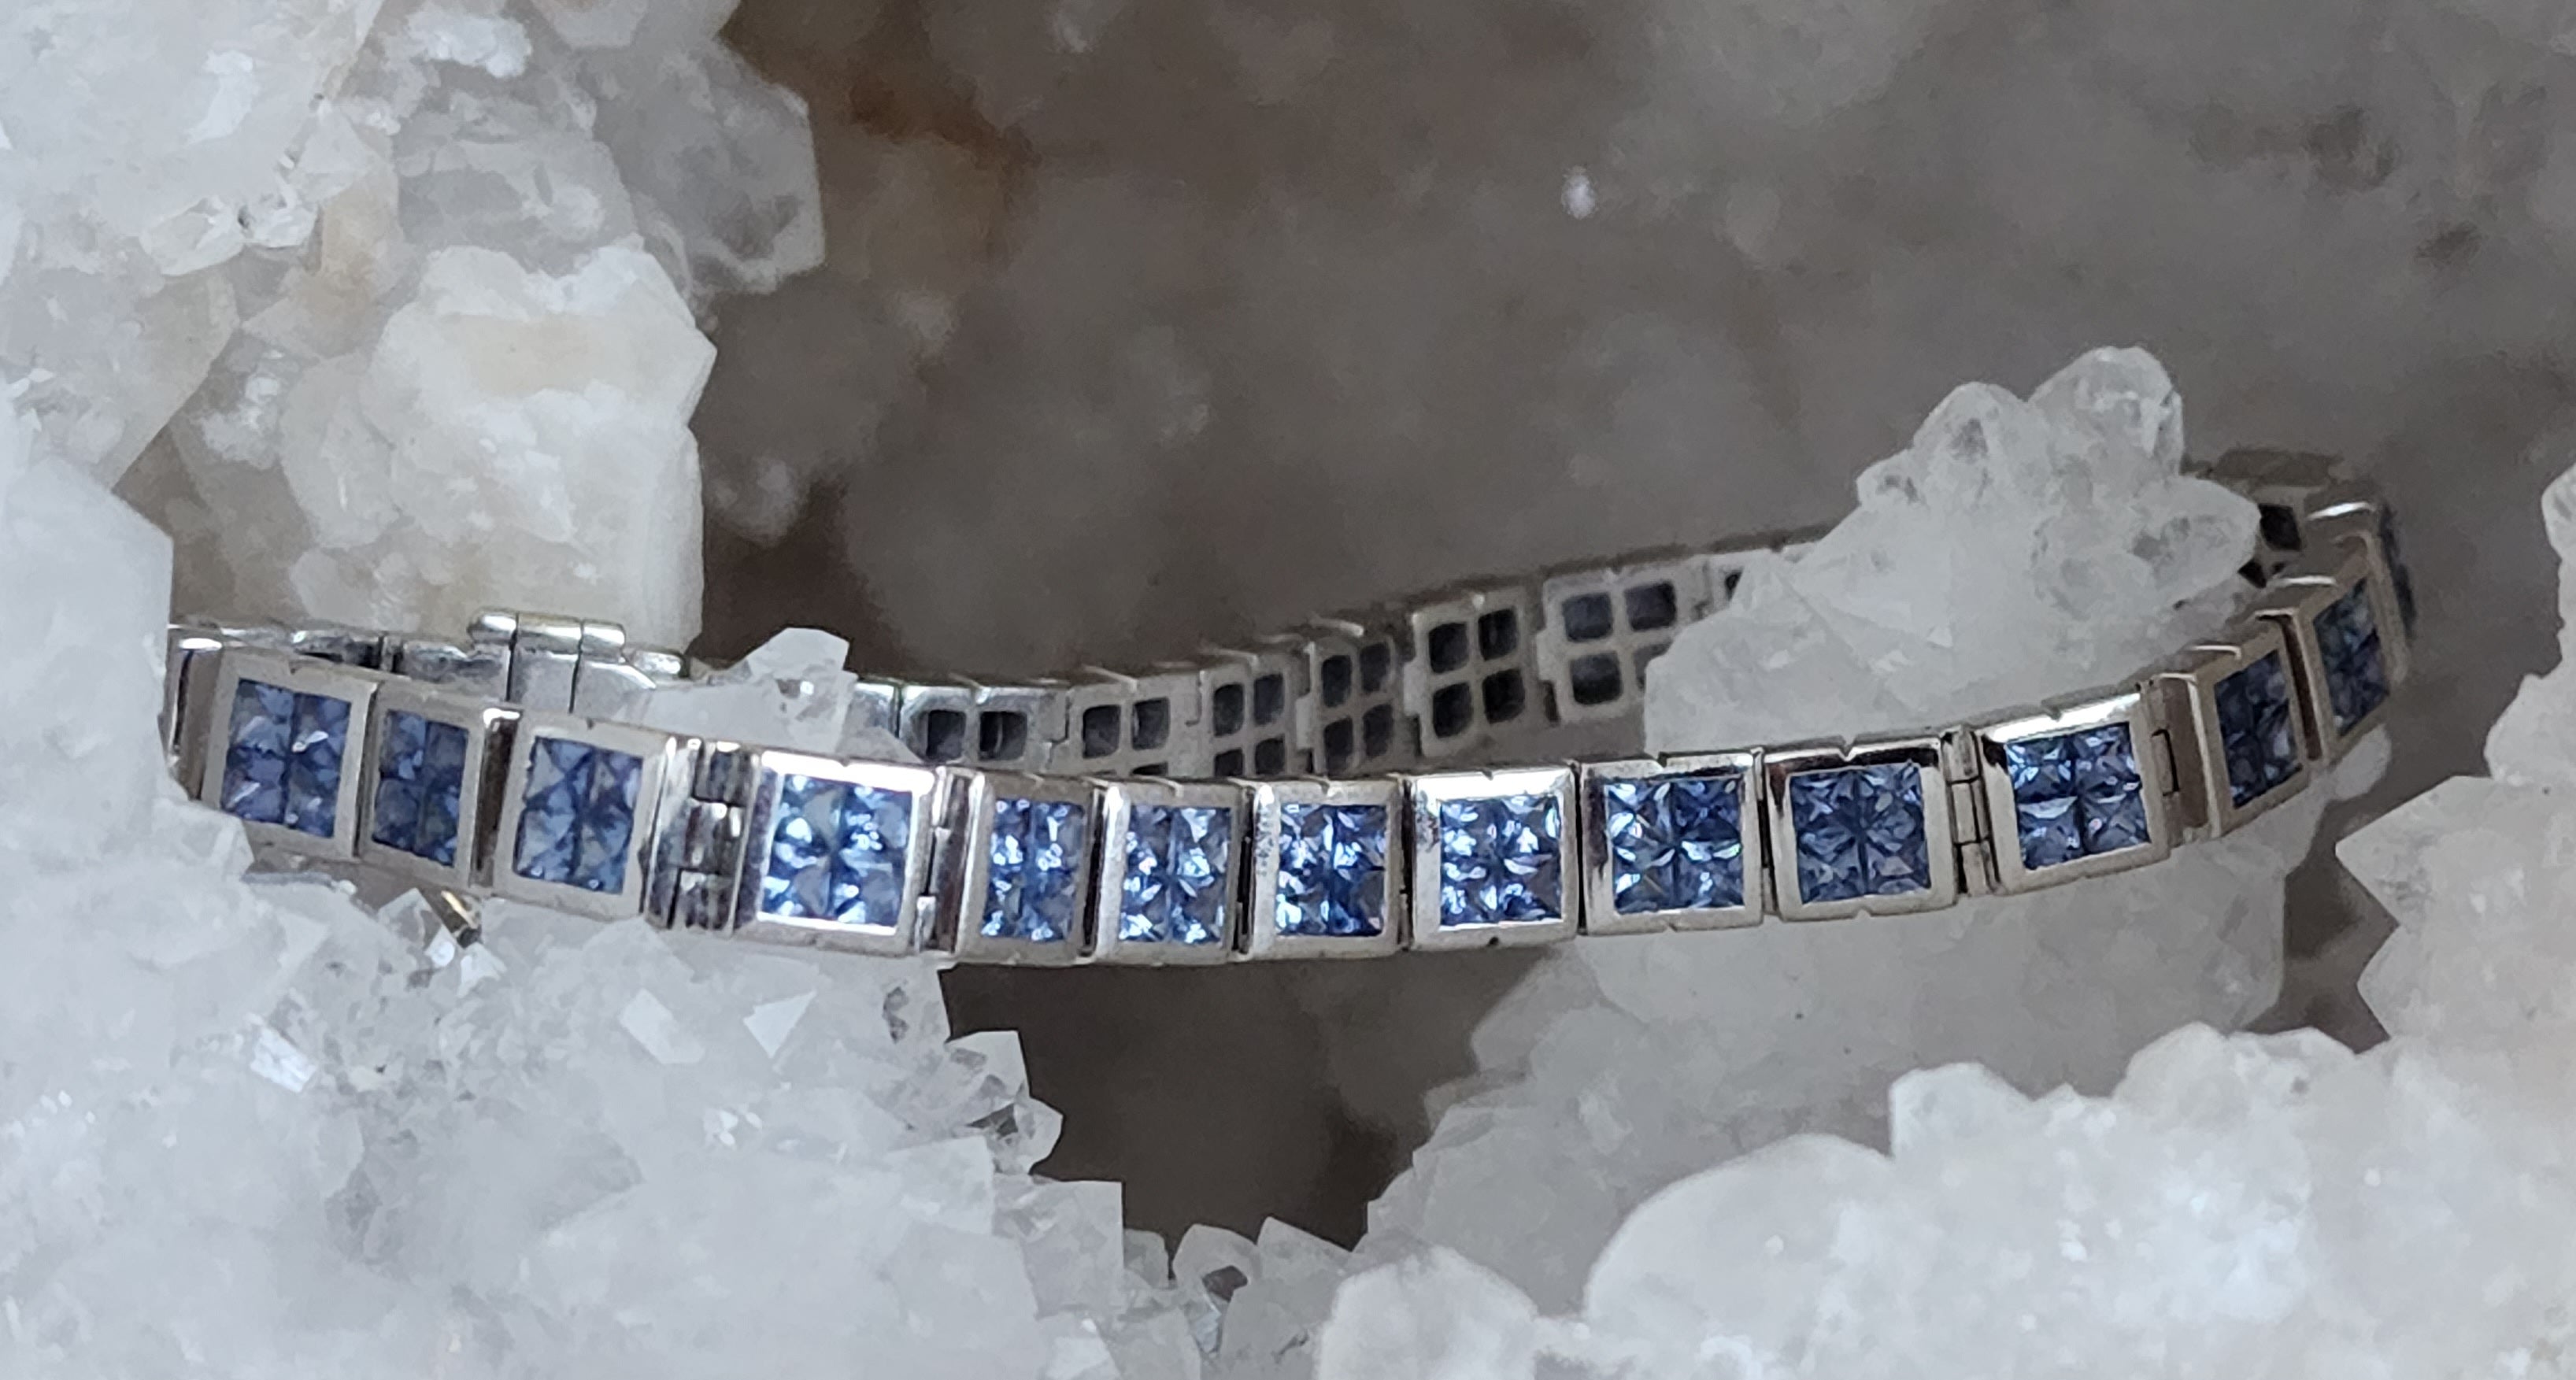 Bracelet - Vintage 112 Yogo Sapphire Paneled Design with Clasp - 7 Inch Length